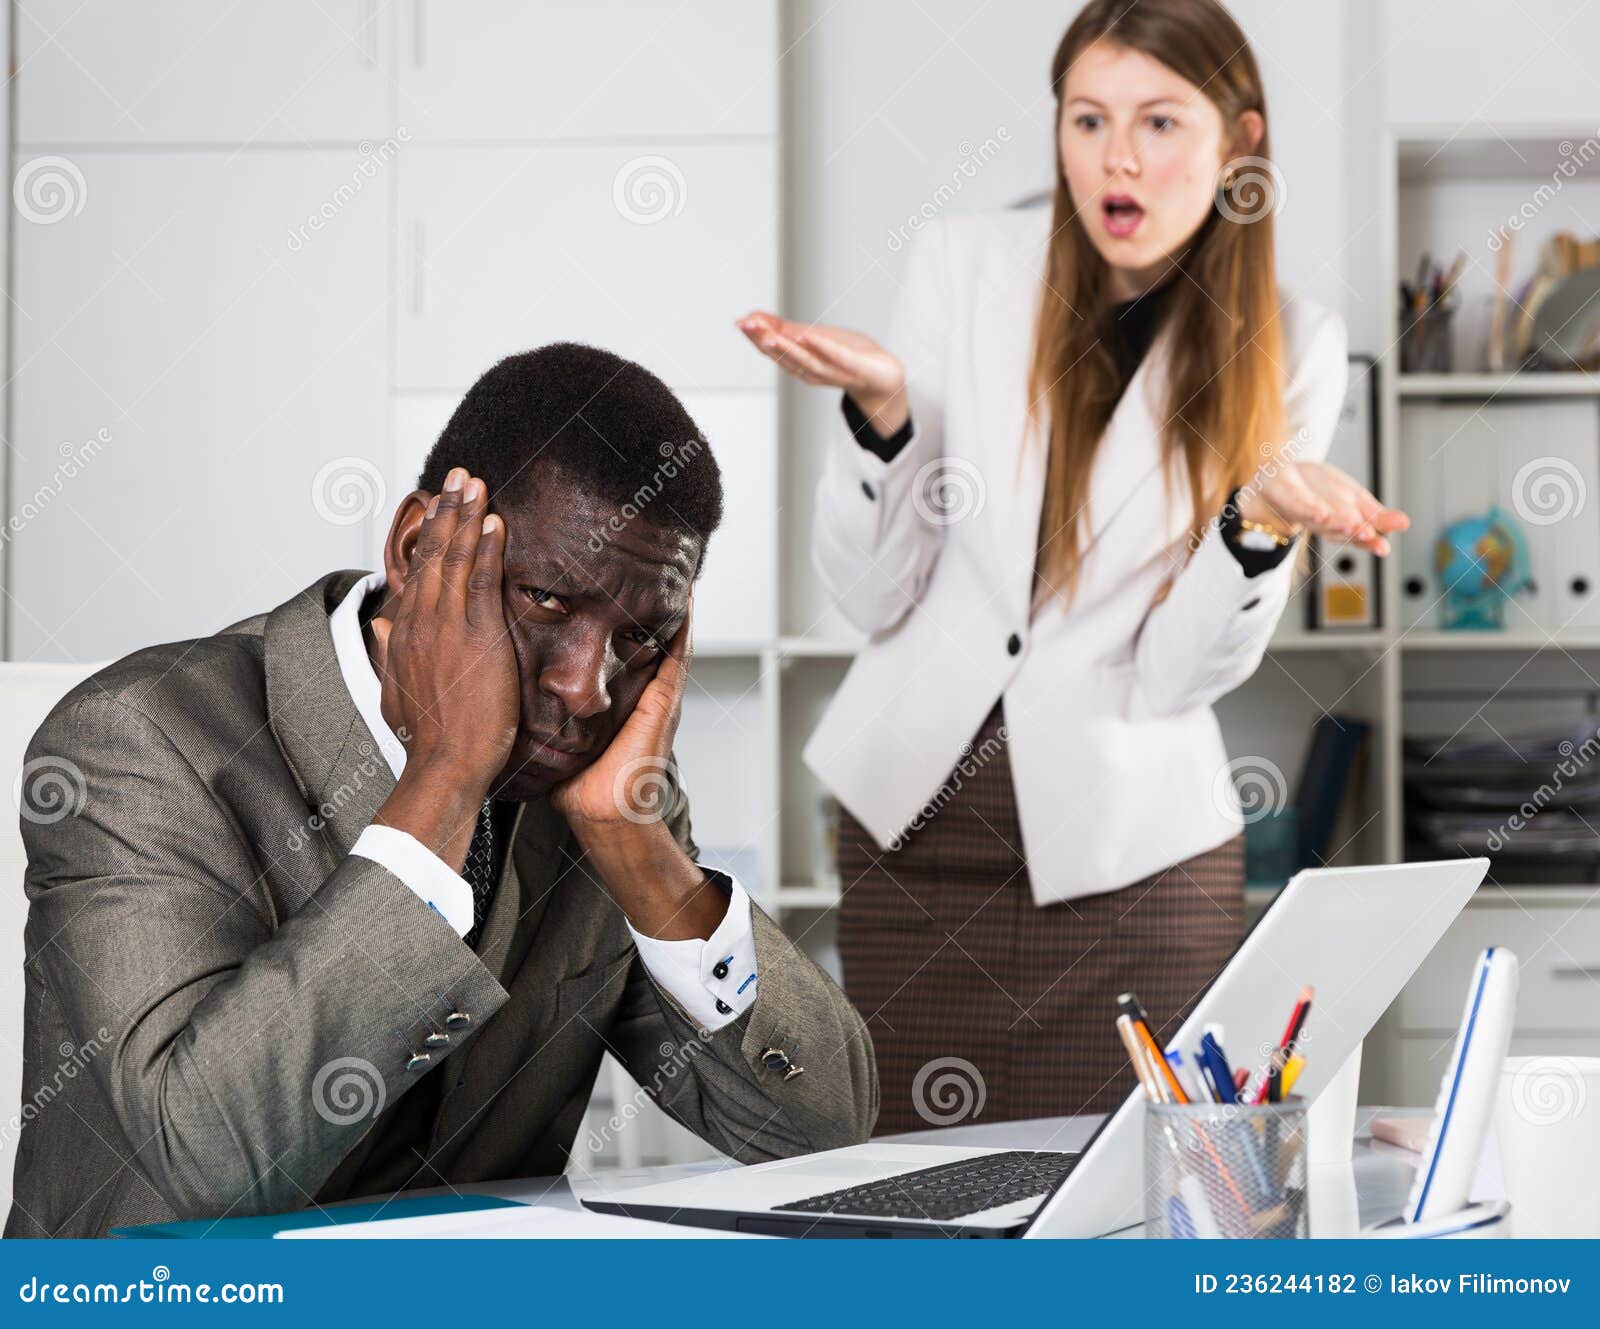 upset-man-angry-boss-frustrated-sitting-office-desk-disgruntled-female-behind-236244182.jpg